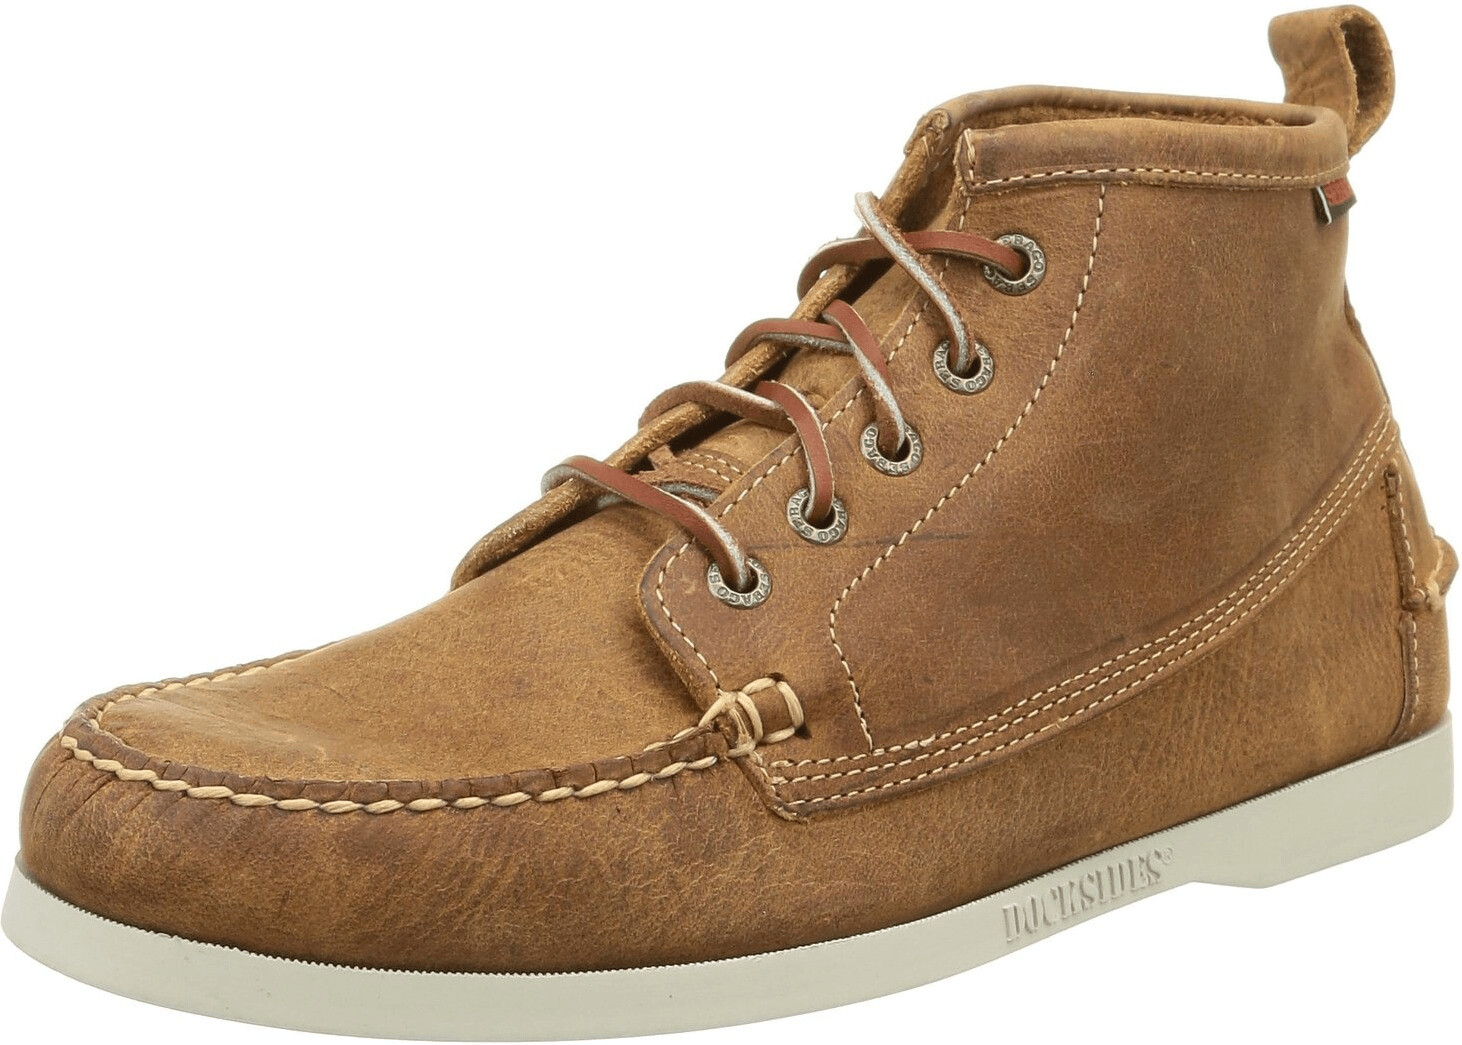 Sebago Beacon Chukka Boot brown leather